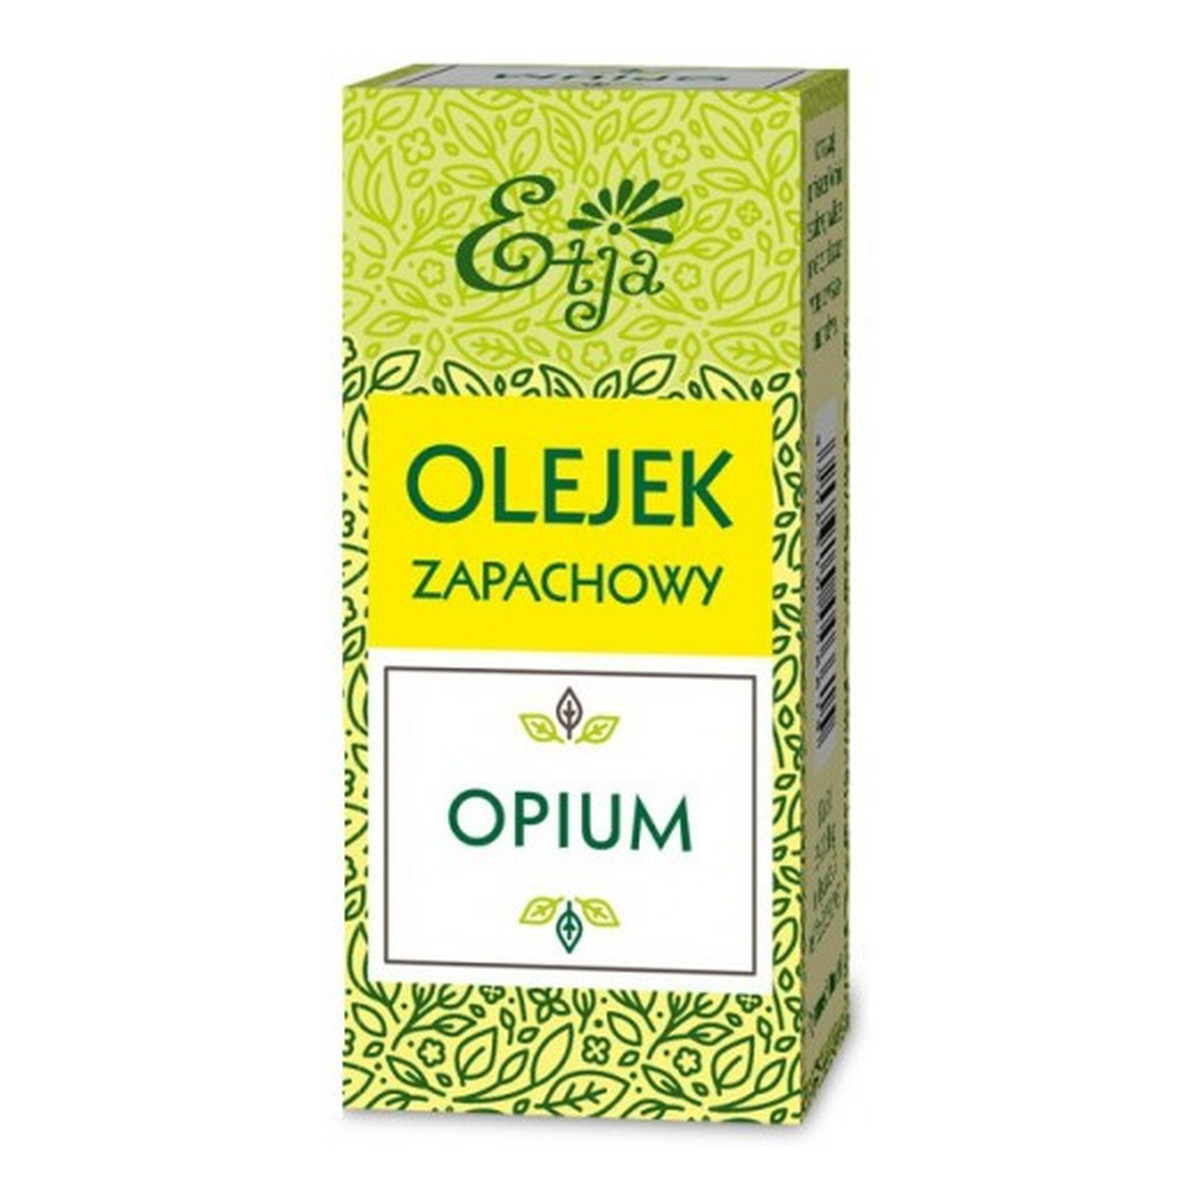 Etja Olejek zapachowy opium 10ml